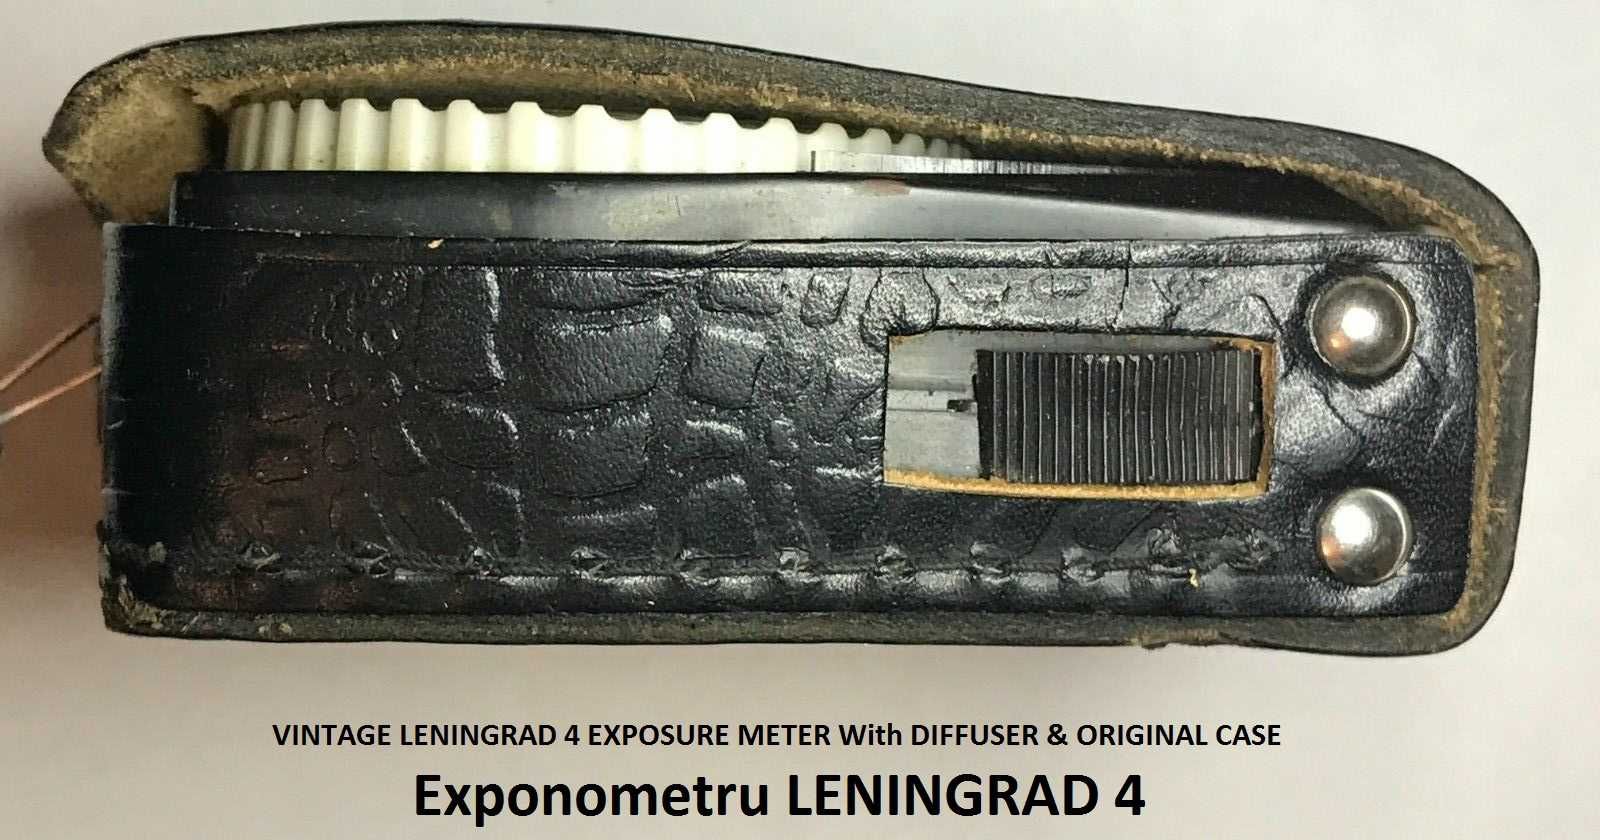 Exponometru LENINGRAD 4. Vintage